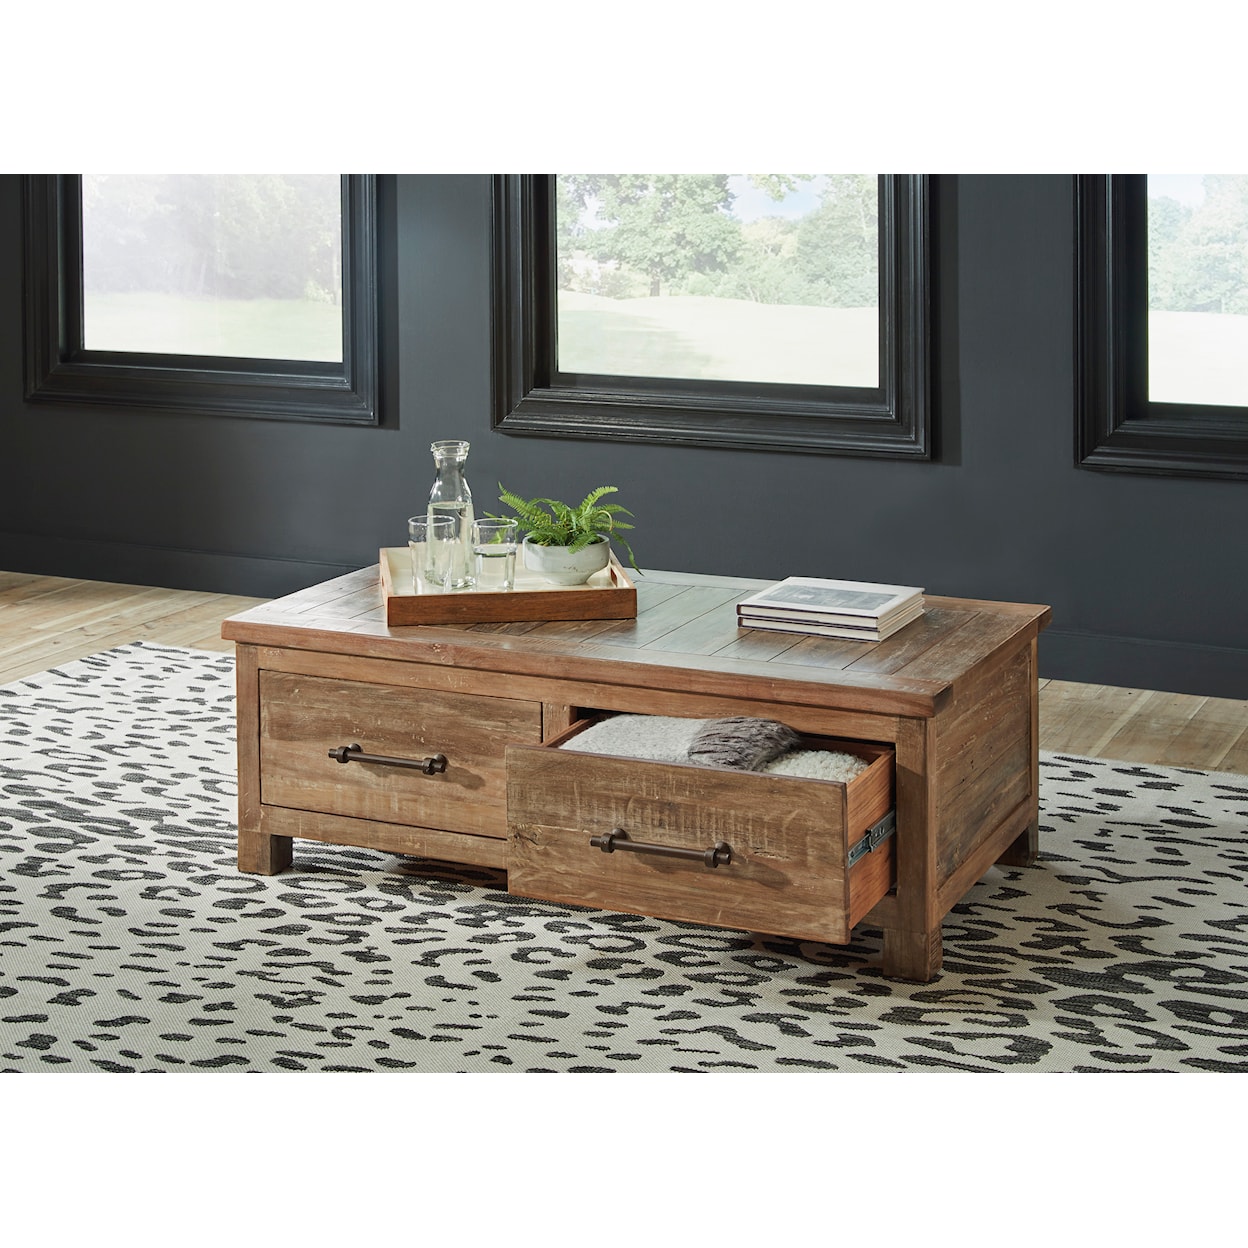 Ashley Furniture Signature Design Randale Coffee Table